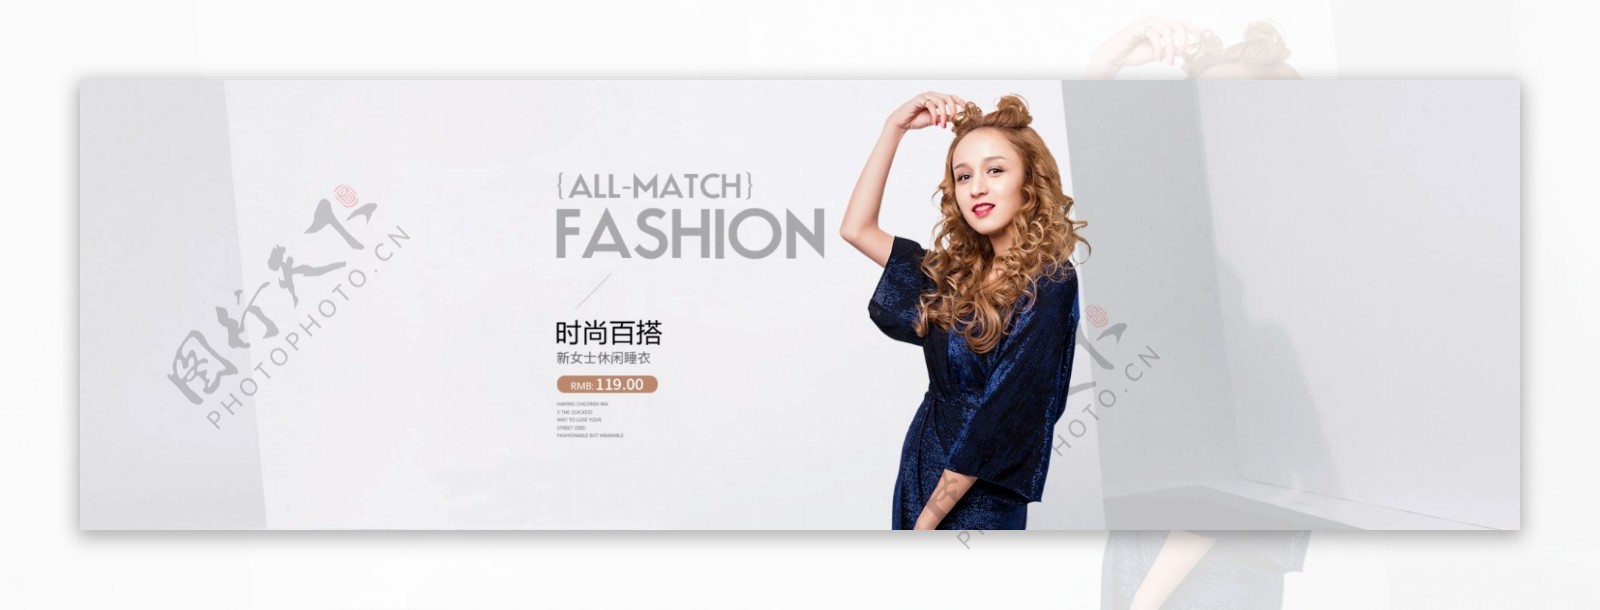 fashion女装促销淘宝banner